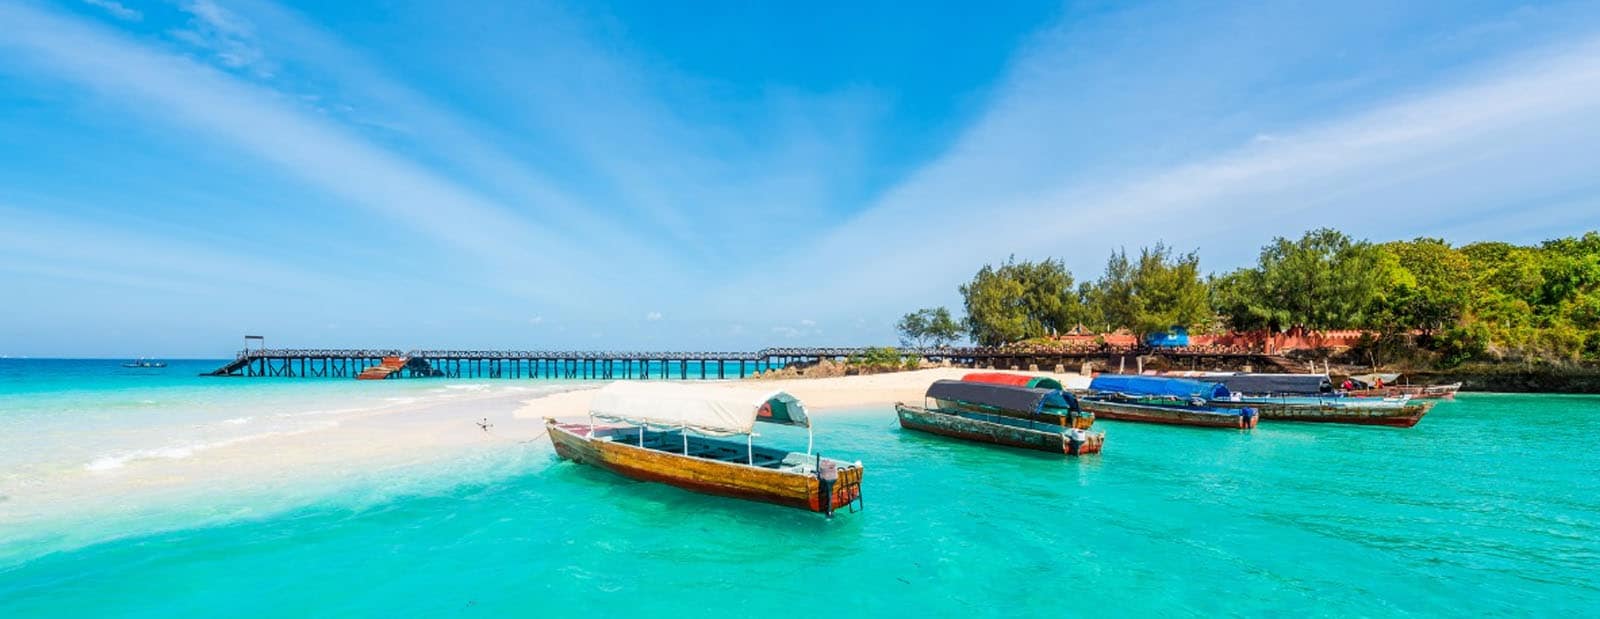 12 Days Best Luxury Tours Tanzania and Zanzibar